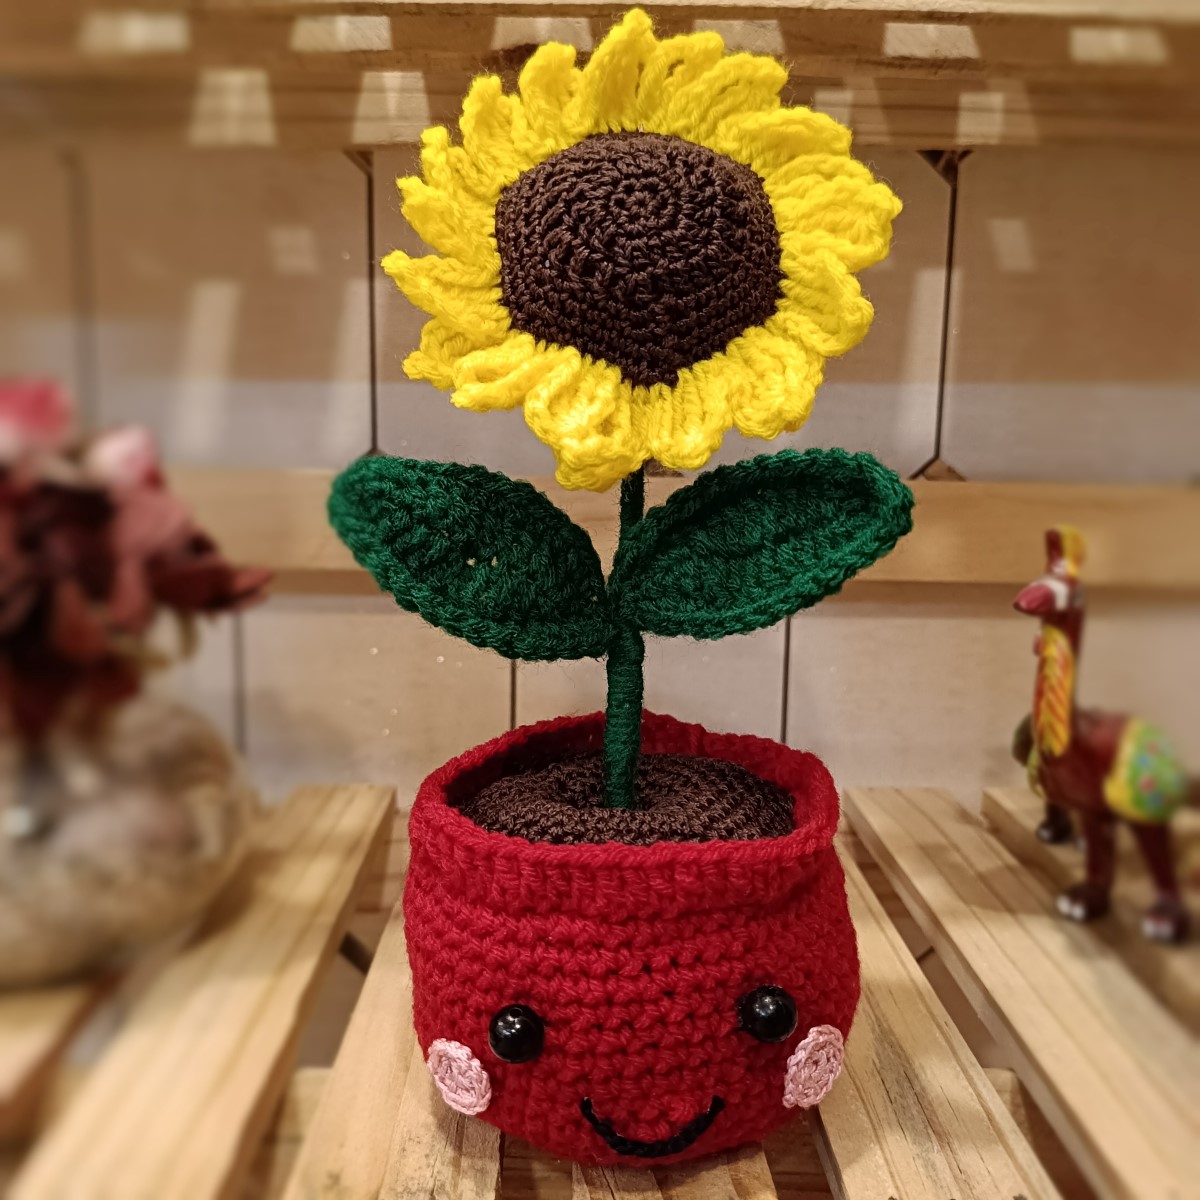 Cheerful Crochet Sunflower in Smiling Red Pot - Buy ladies bag online, Handmade gifts online